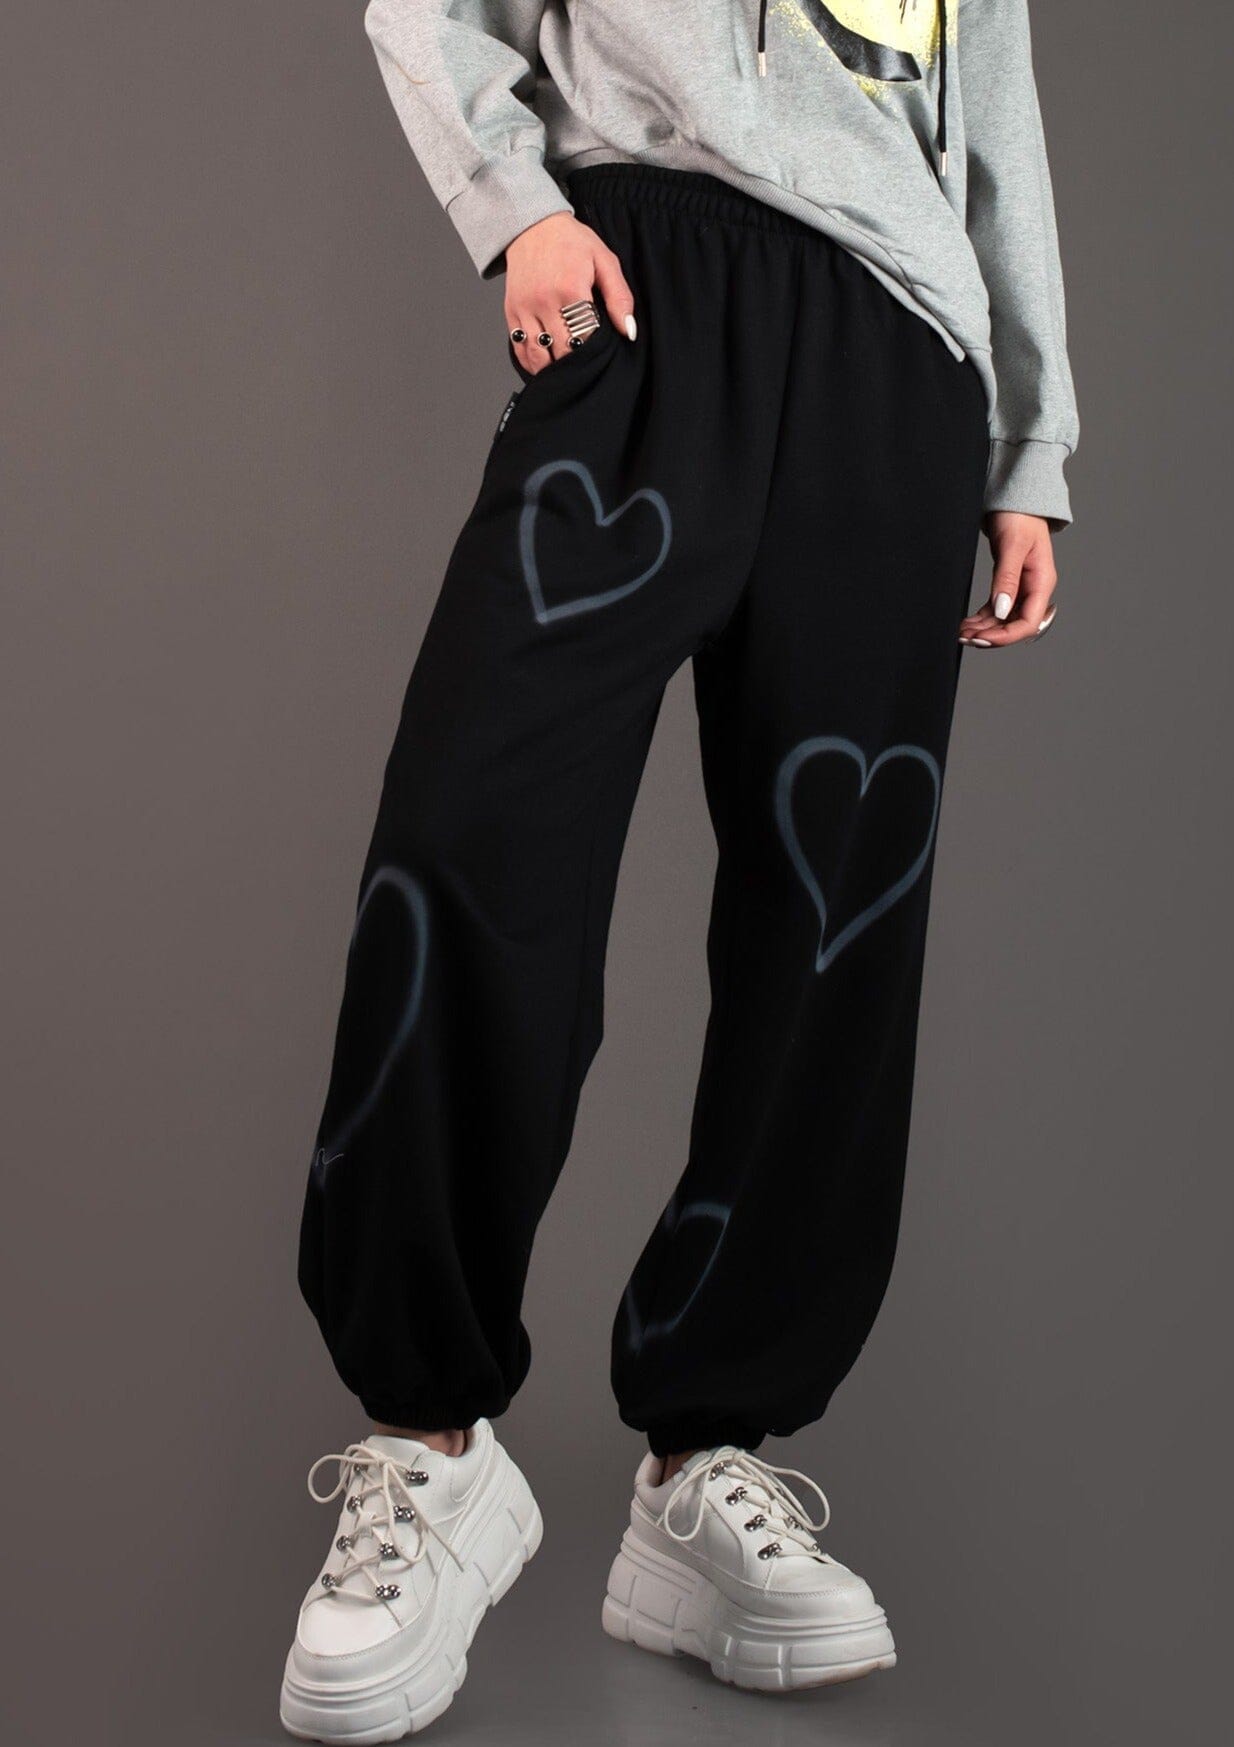 Graffiti Heart Sweatpants Pants Kate Hewko Black One Size 